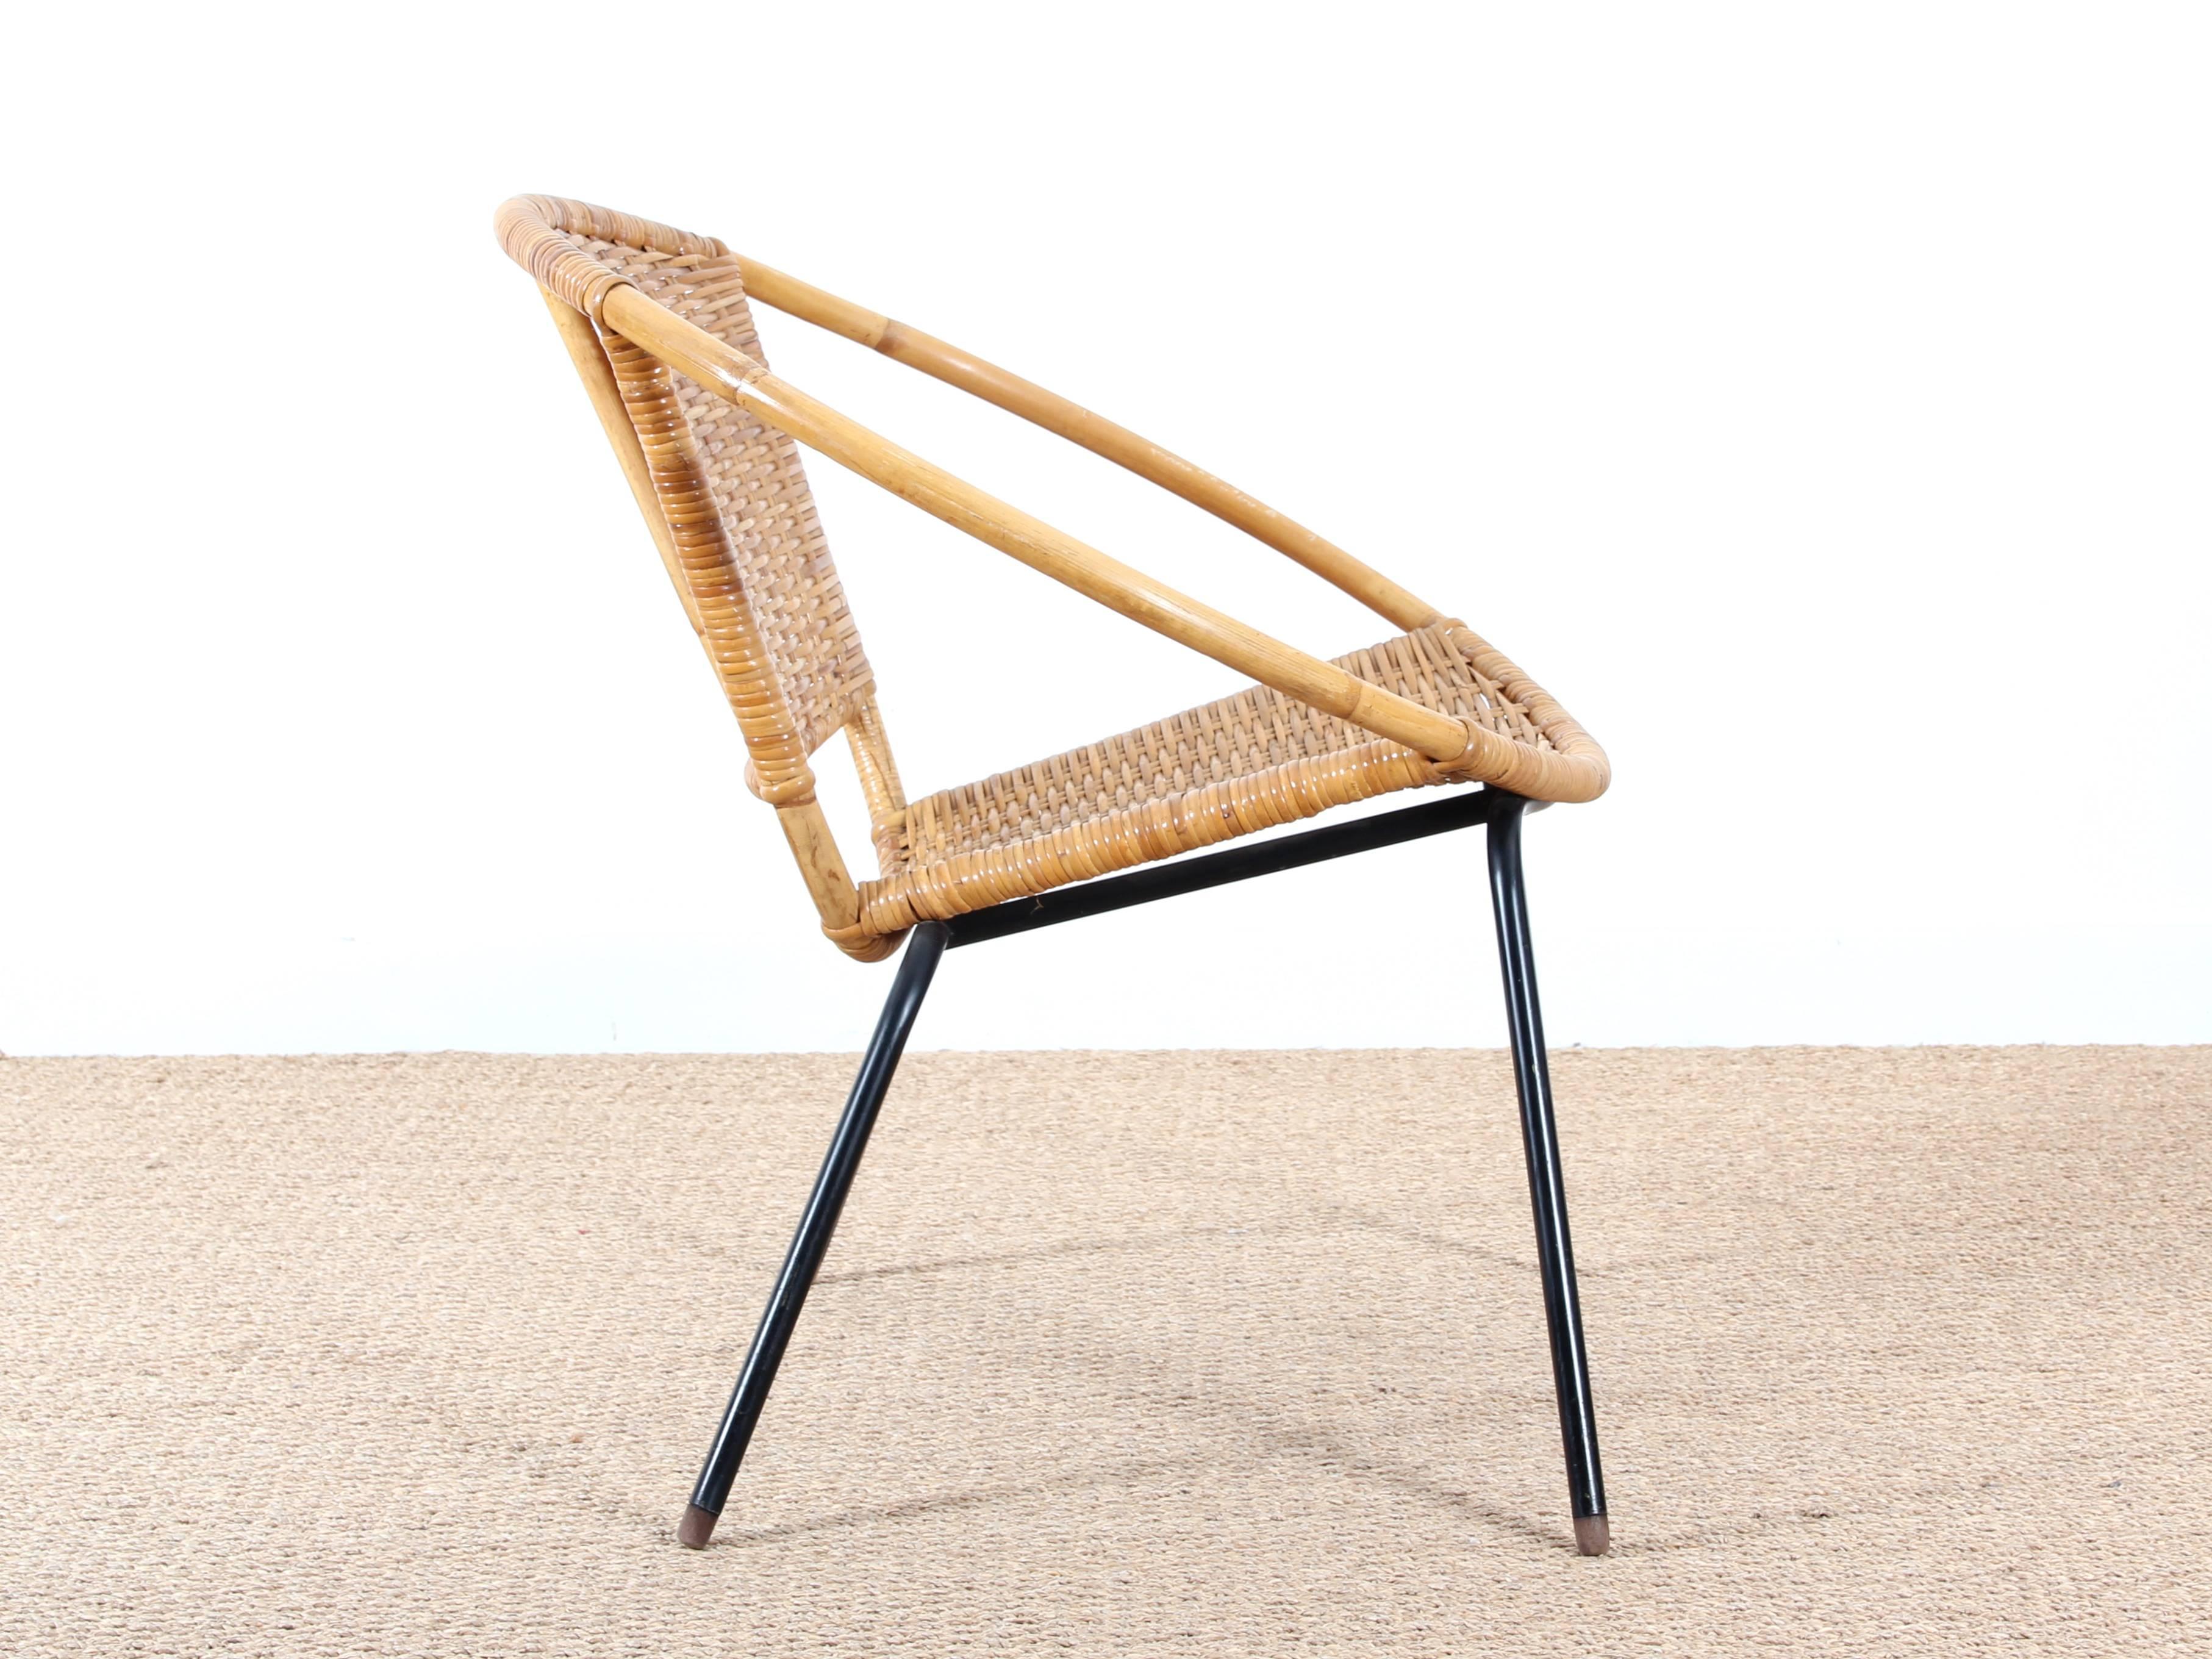 Scandinavian rattan chair. Base in black lacquered steel. Caps teak feet.

In perfect original condition.